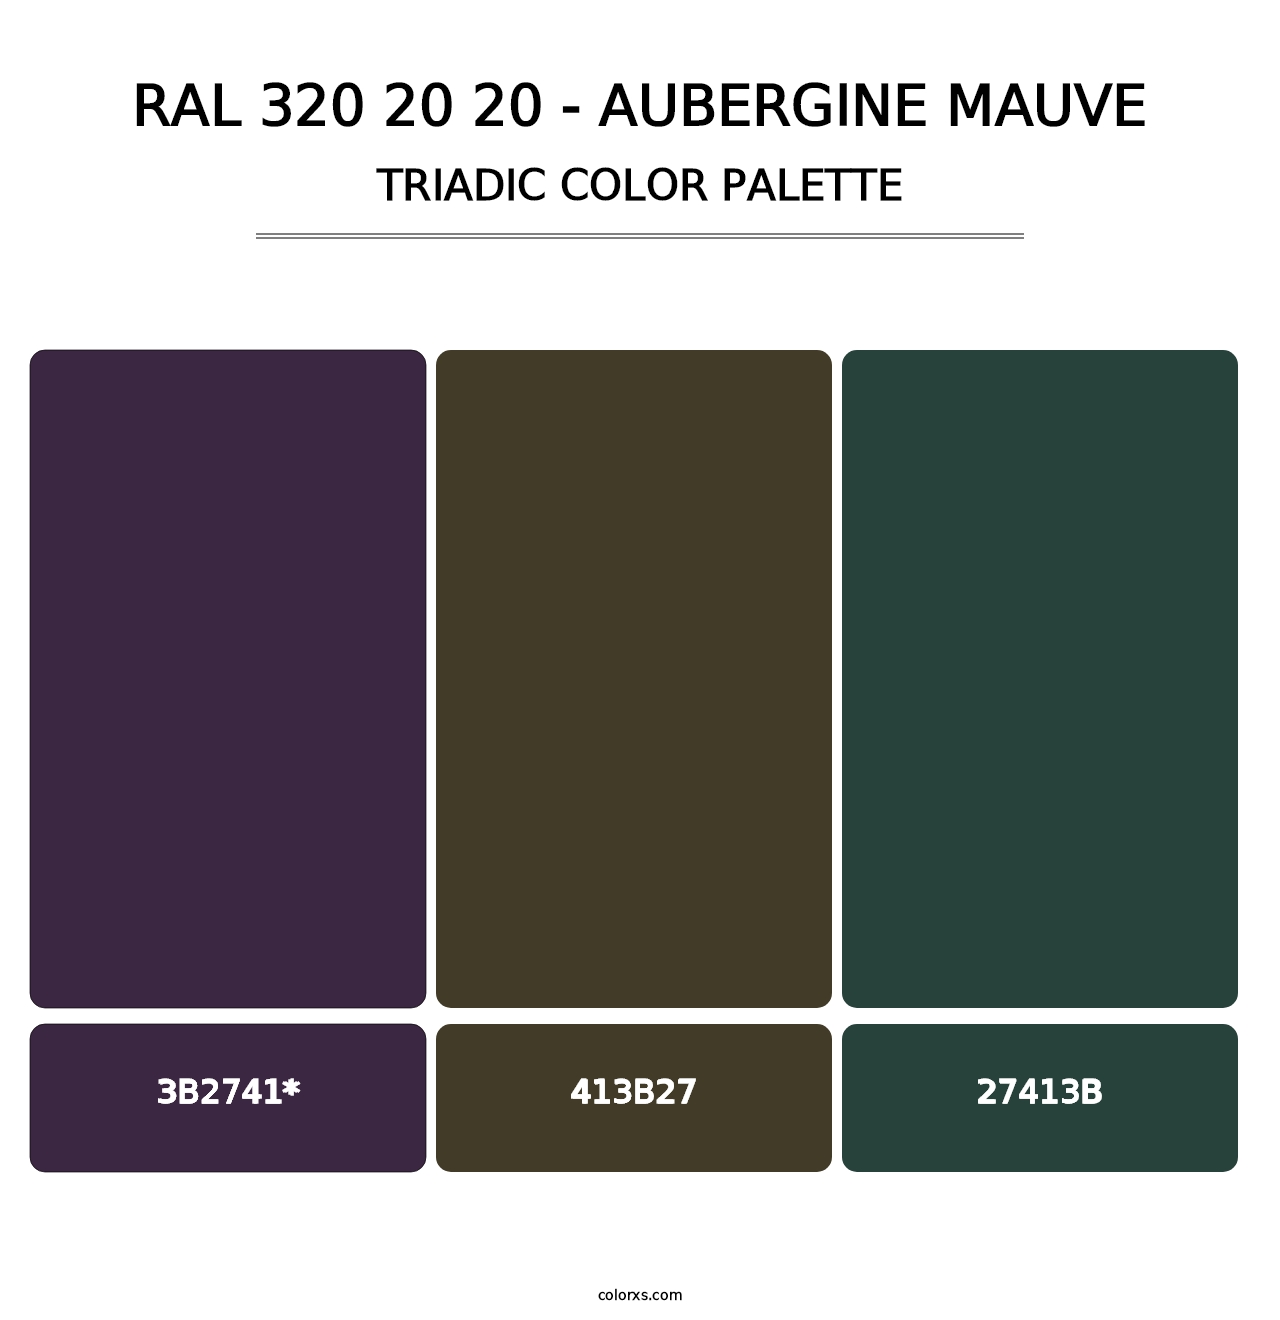 RAL 320 20 20 - Aubergine Mauve - Triadic Color Palette